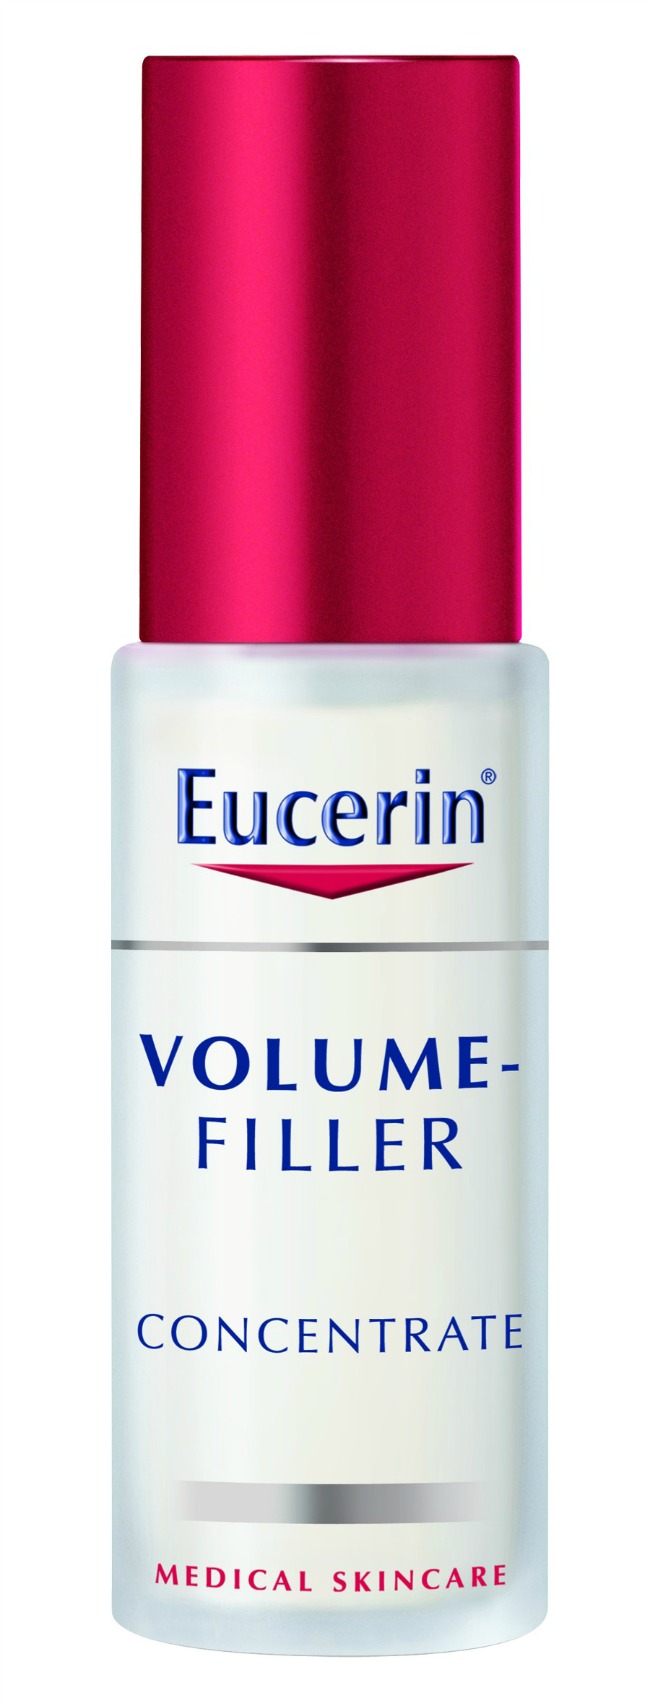 eucerin 1 Eucerin Volume Filler koncentrat: Koncentrat protiv gubitka volumena kože lica